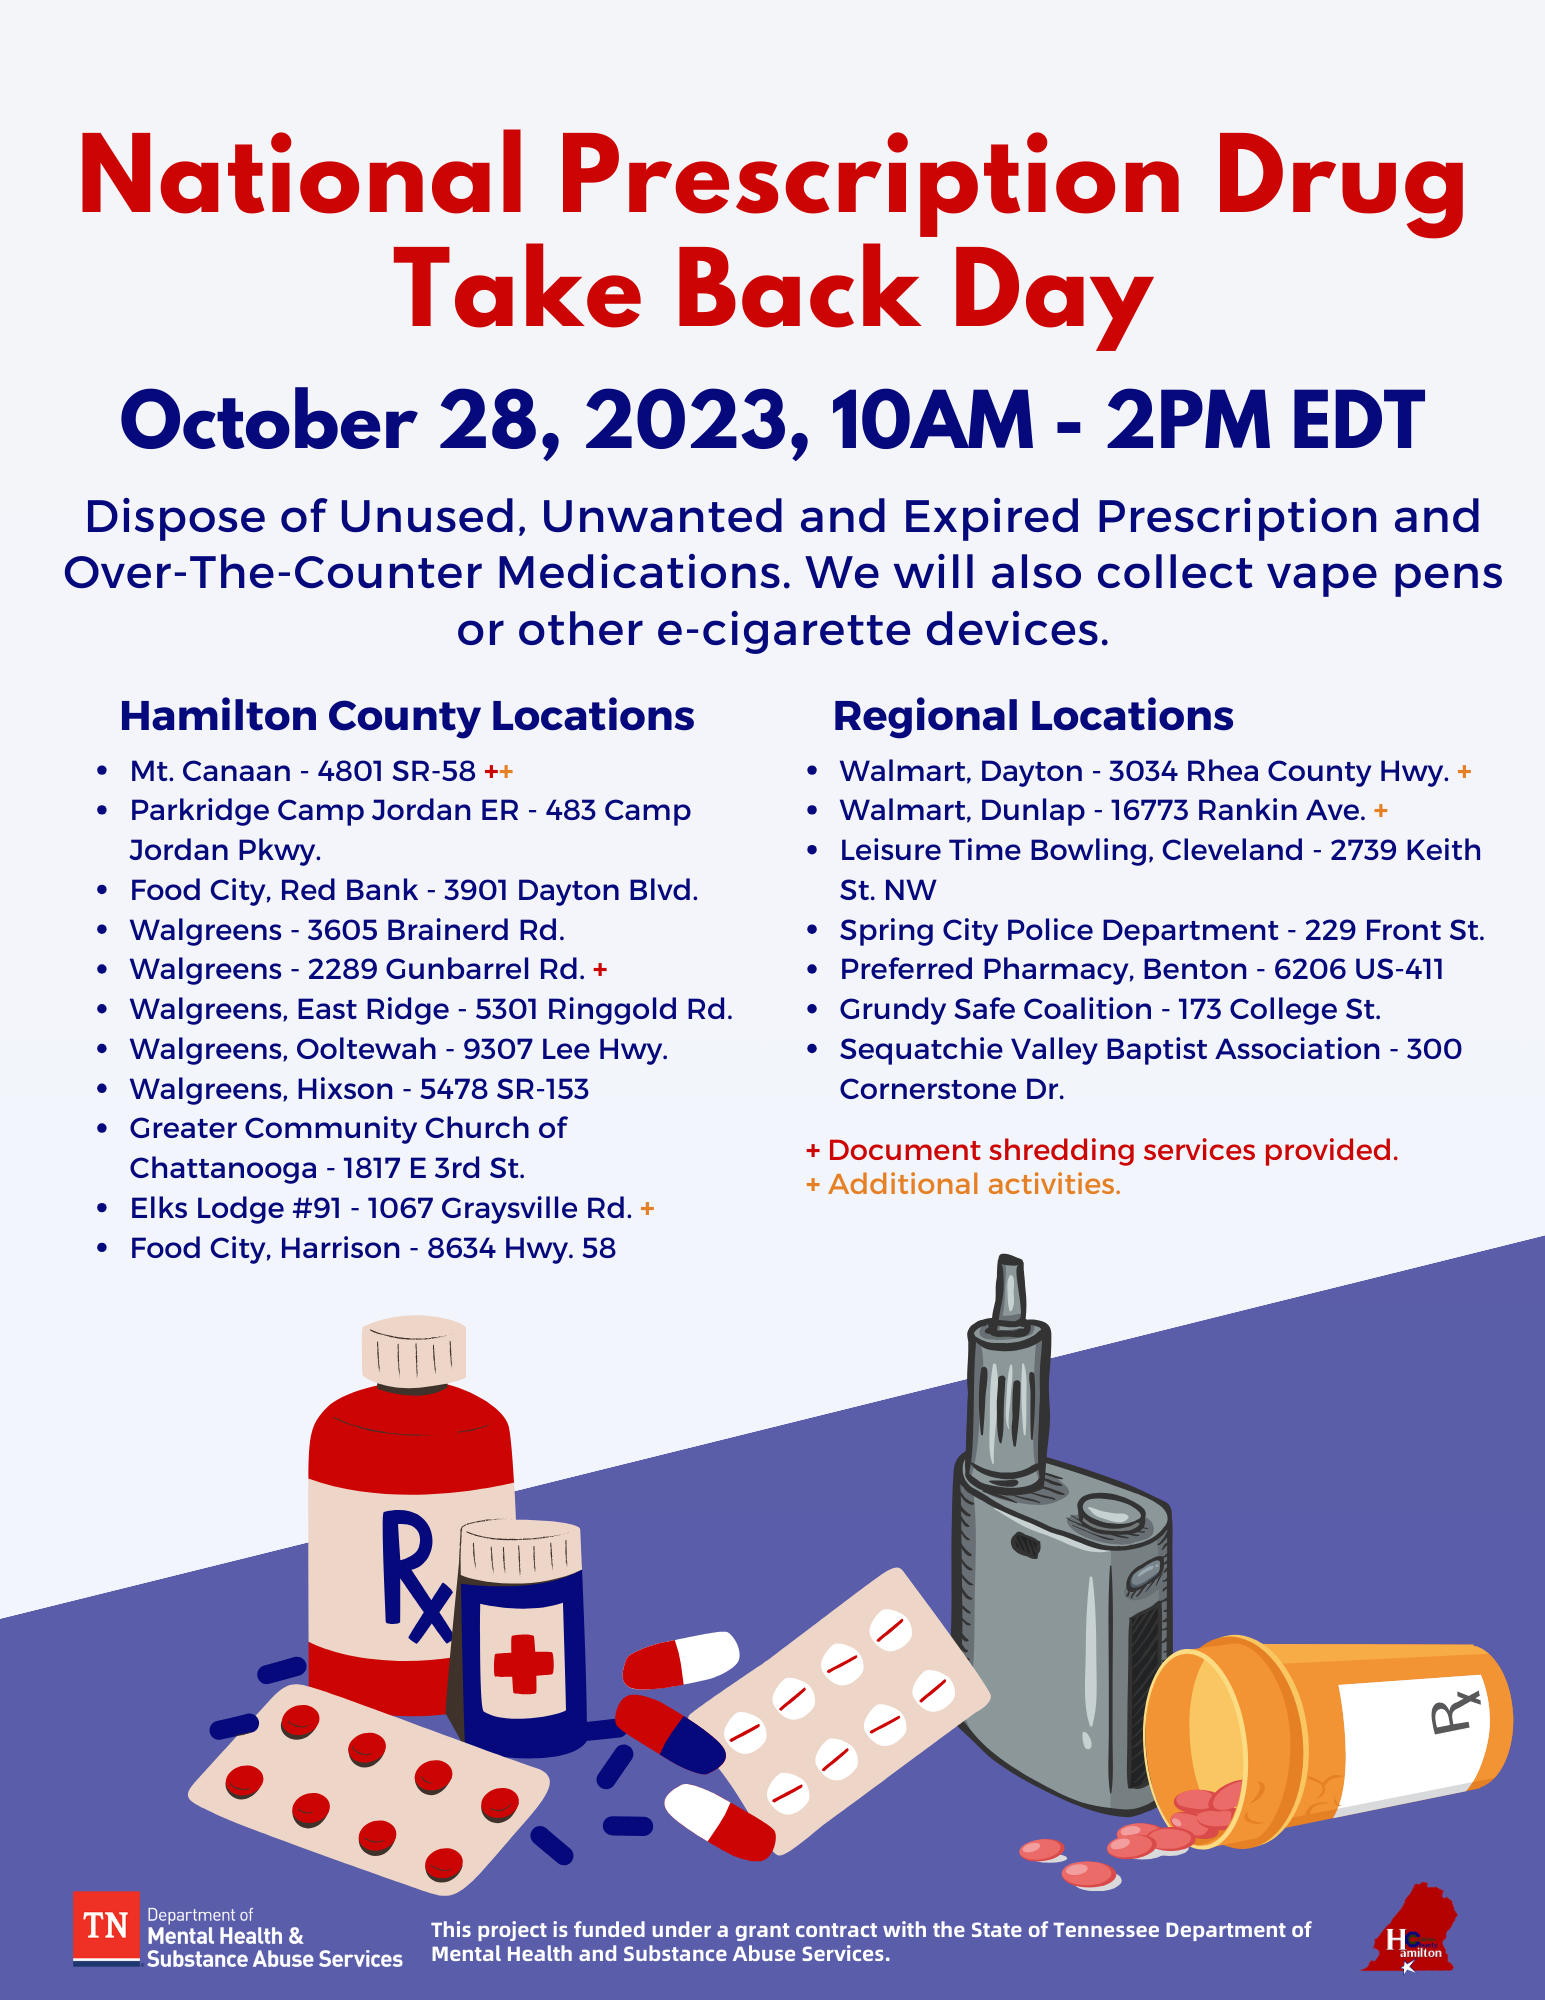 National Prescription Drug Take Back Day - Saturday, October 28, 2023